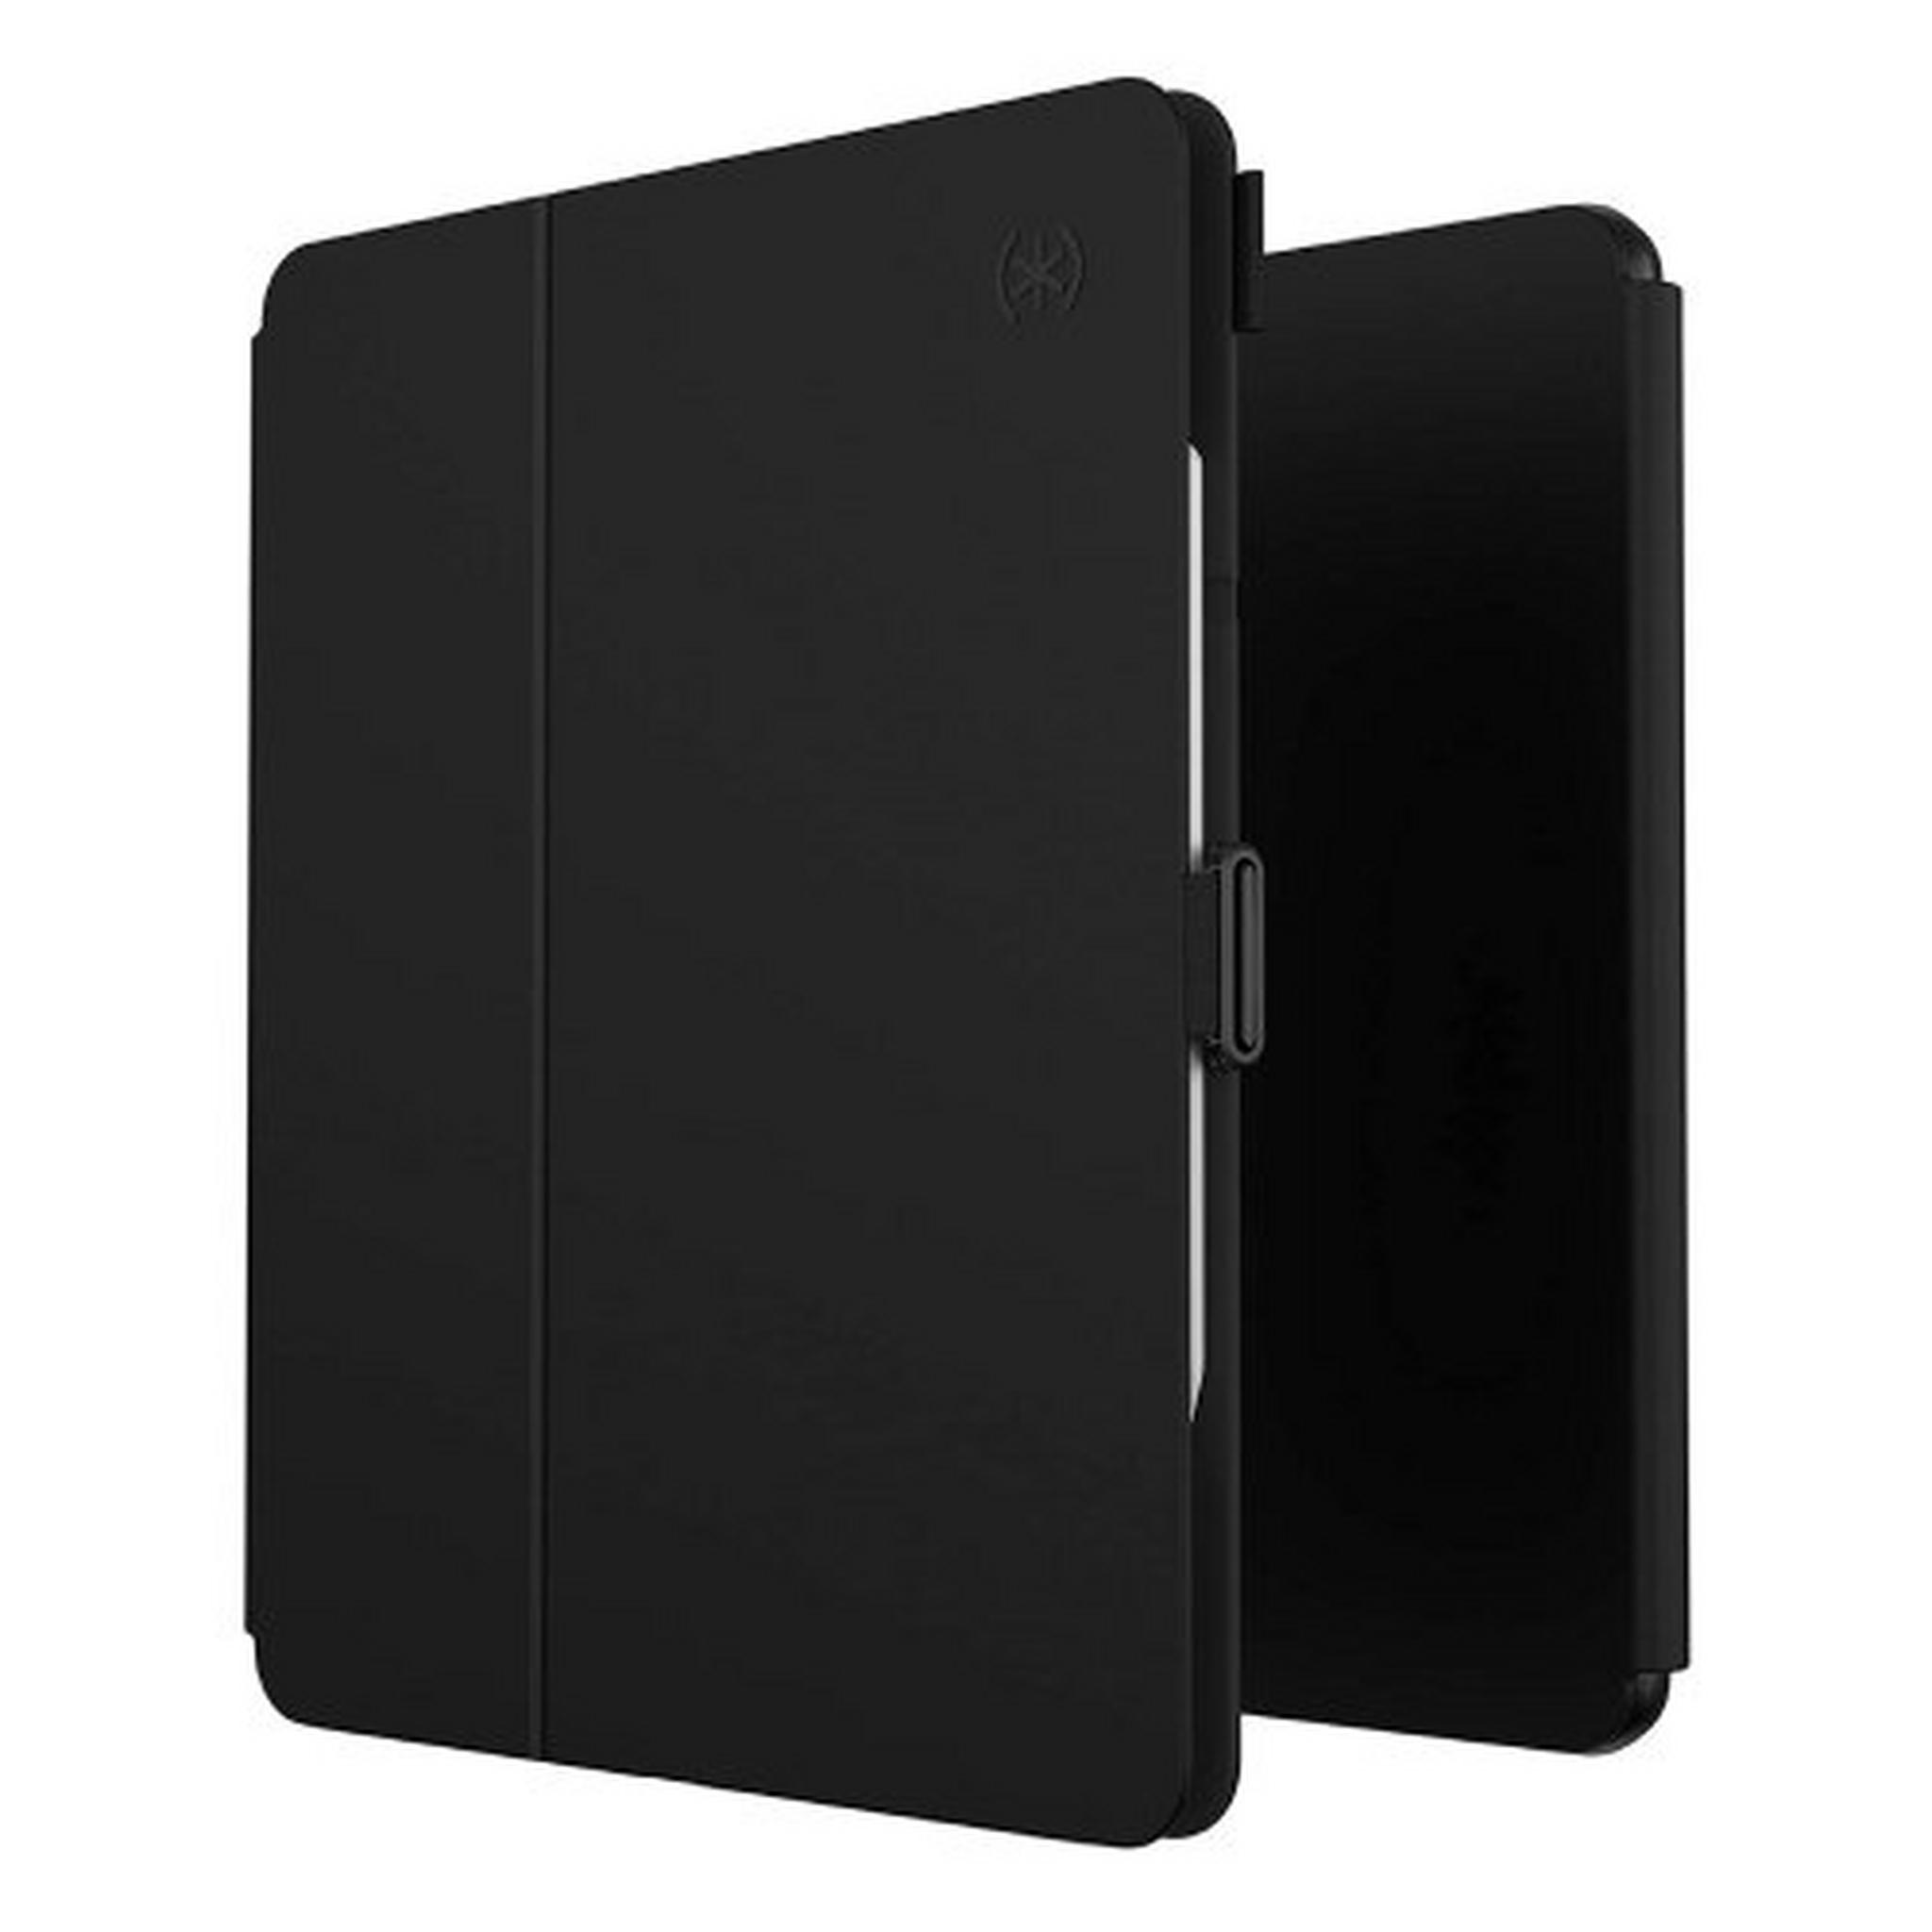 Speck iPad 11 Pro (2018 model) Folio Case - Black